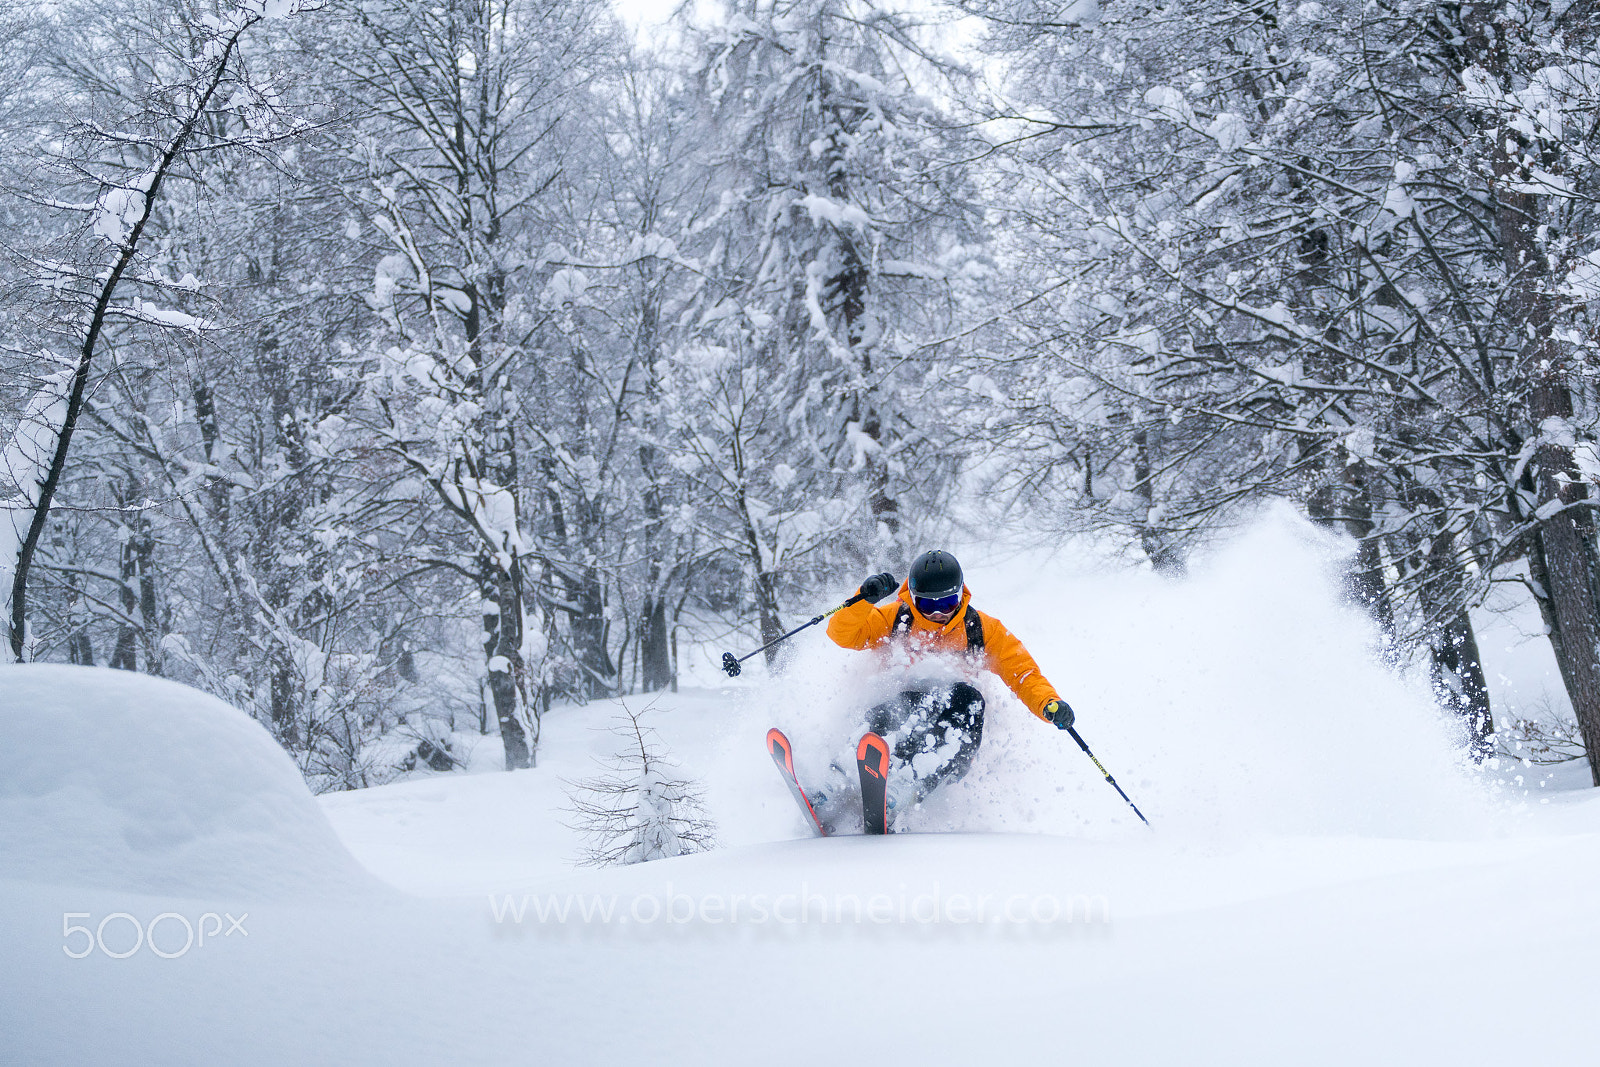 Sony a99 II sample photo. Powder skiing in winter wonderland photography